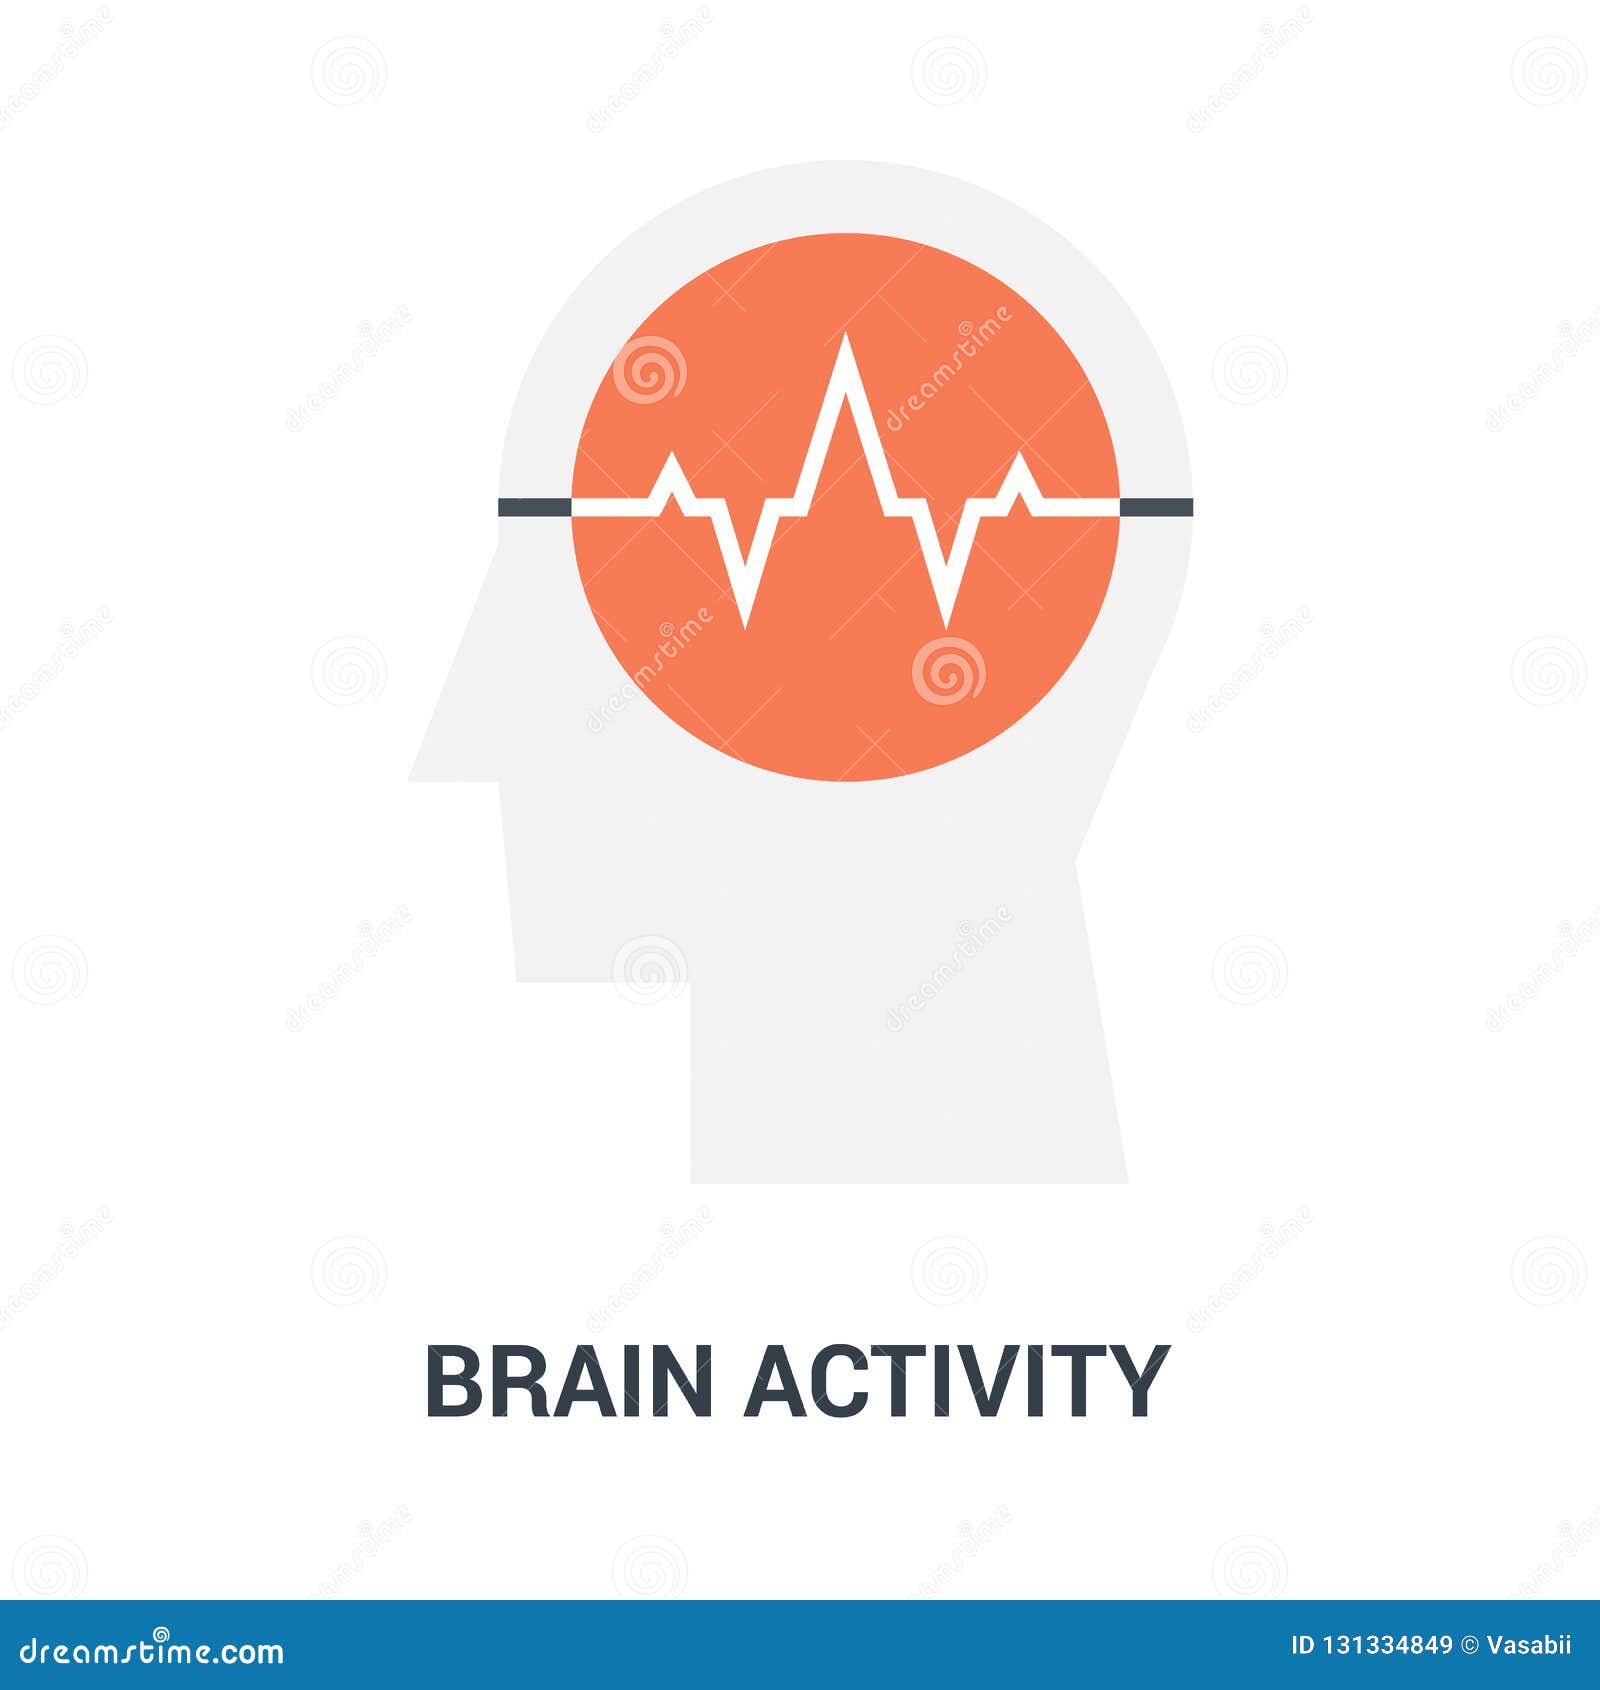 brain activity icon concept